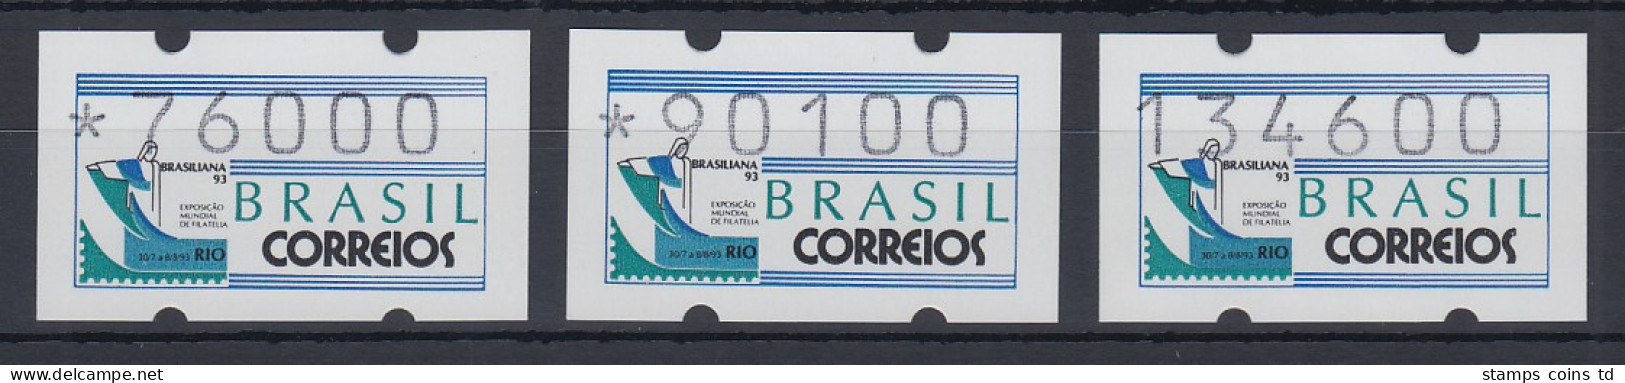 Brasilien Klüssendorf-ATM 1993 BRASILIANA Mi-Nr 5 Satz 76000 - 90100 - 134600 ** - Viñetas De Franqueo (Frama)